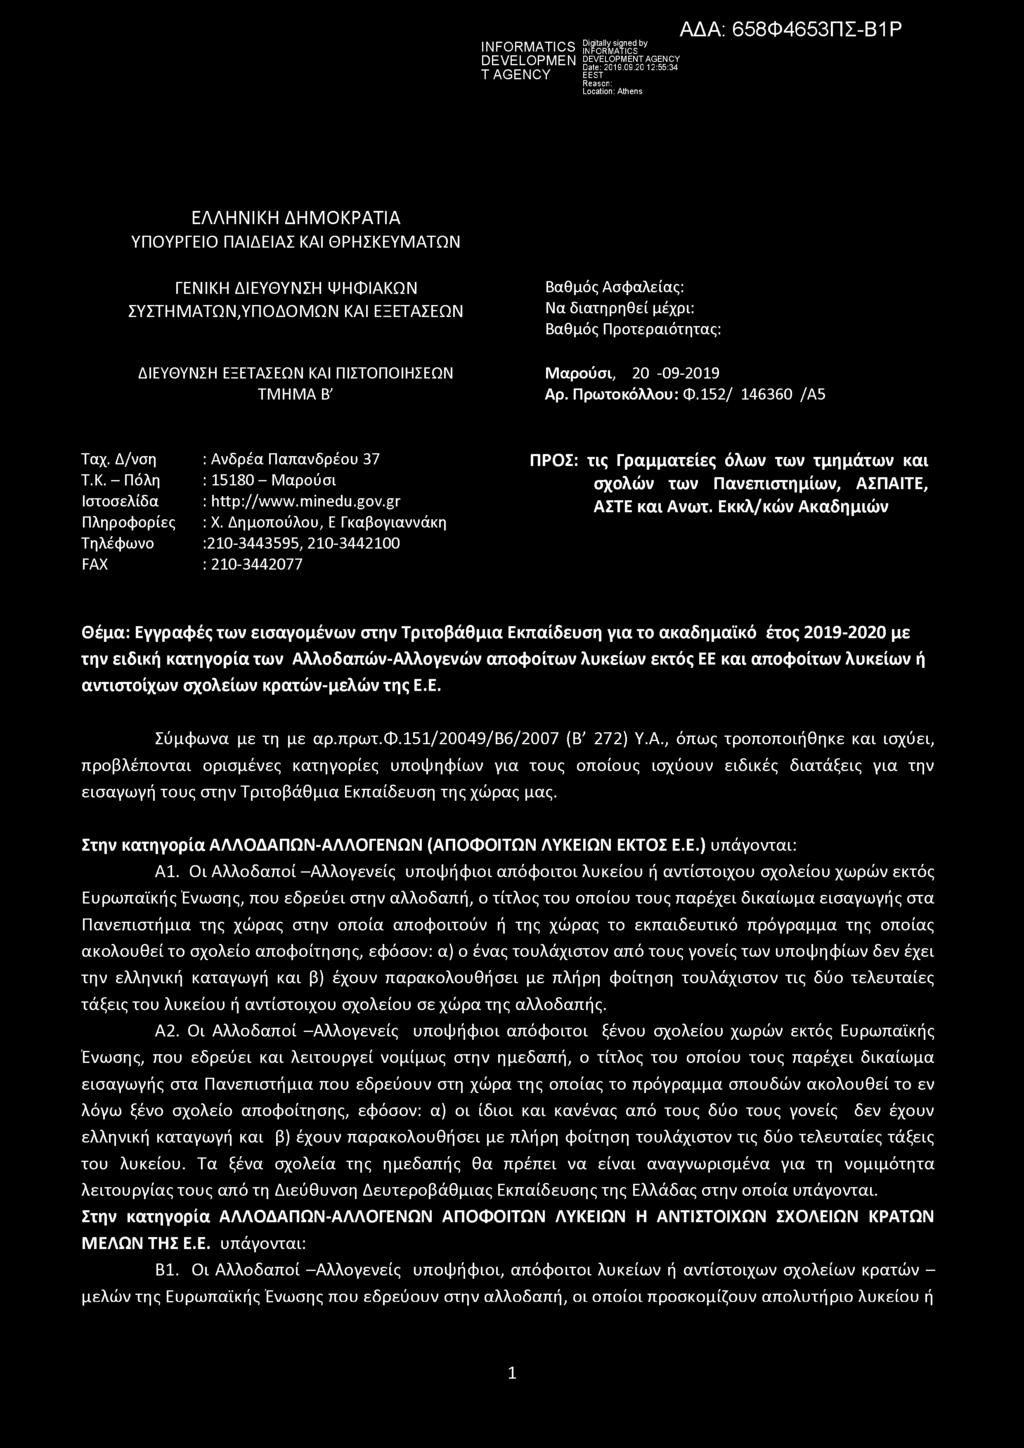 INFORMATICS DEVELOPMEN ΤAGENCY Digitally signed by INFORMATICS DEVELOPM ENT AGEN CY Date: 2019.09.